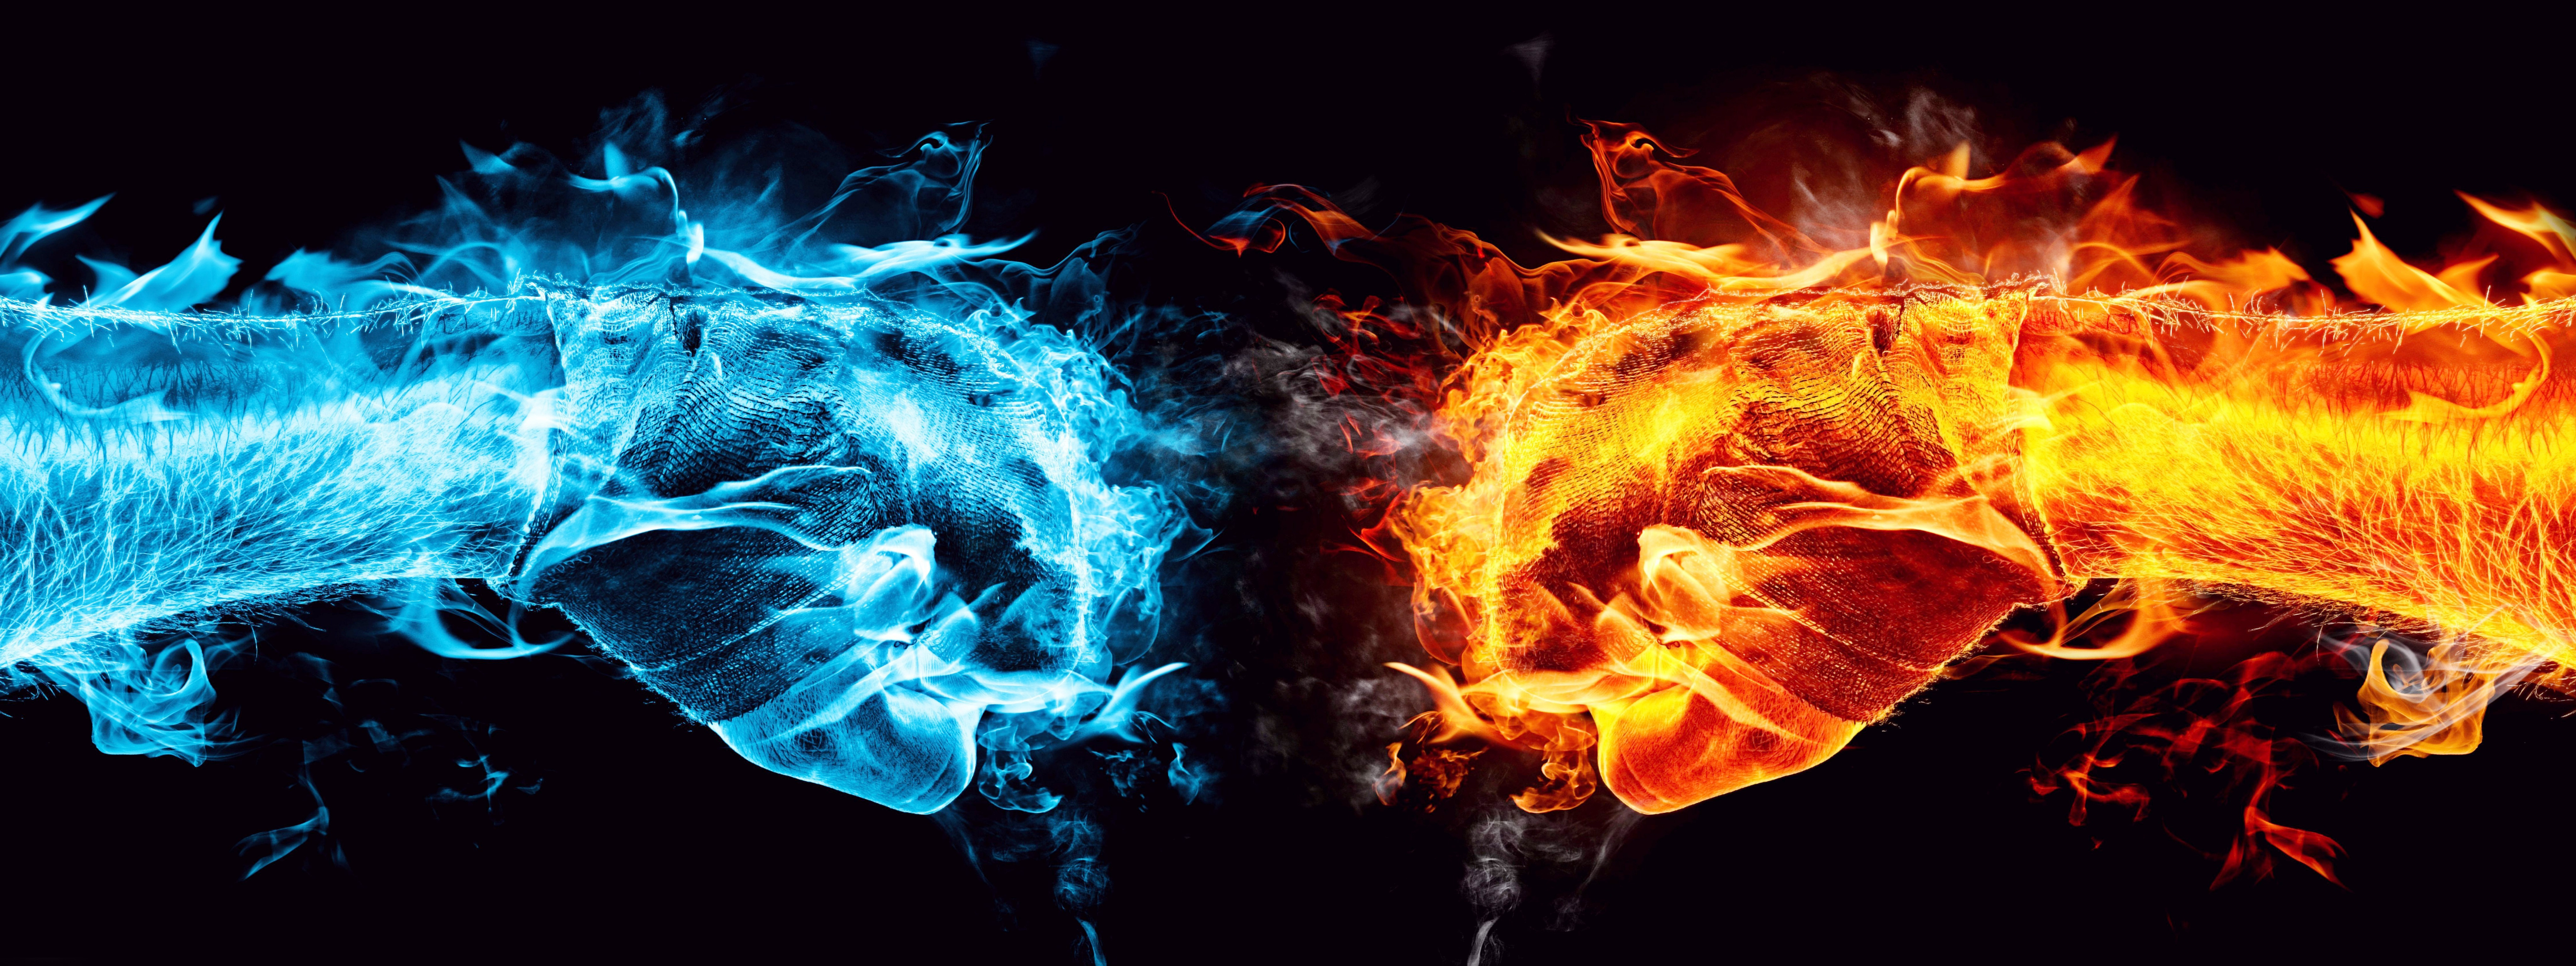 Water And Fire Fists Battle Dual Screen Wallpapers HD / Desktop ...